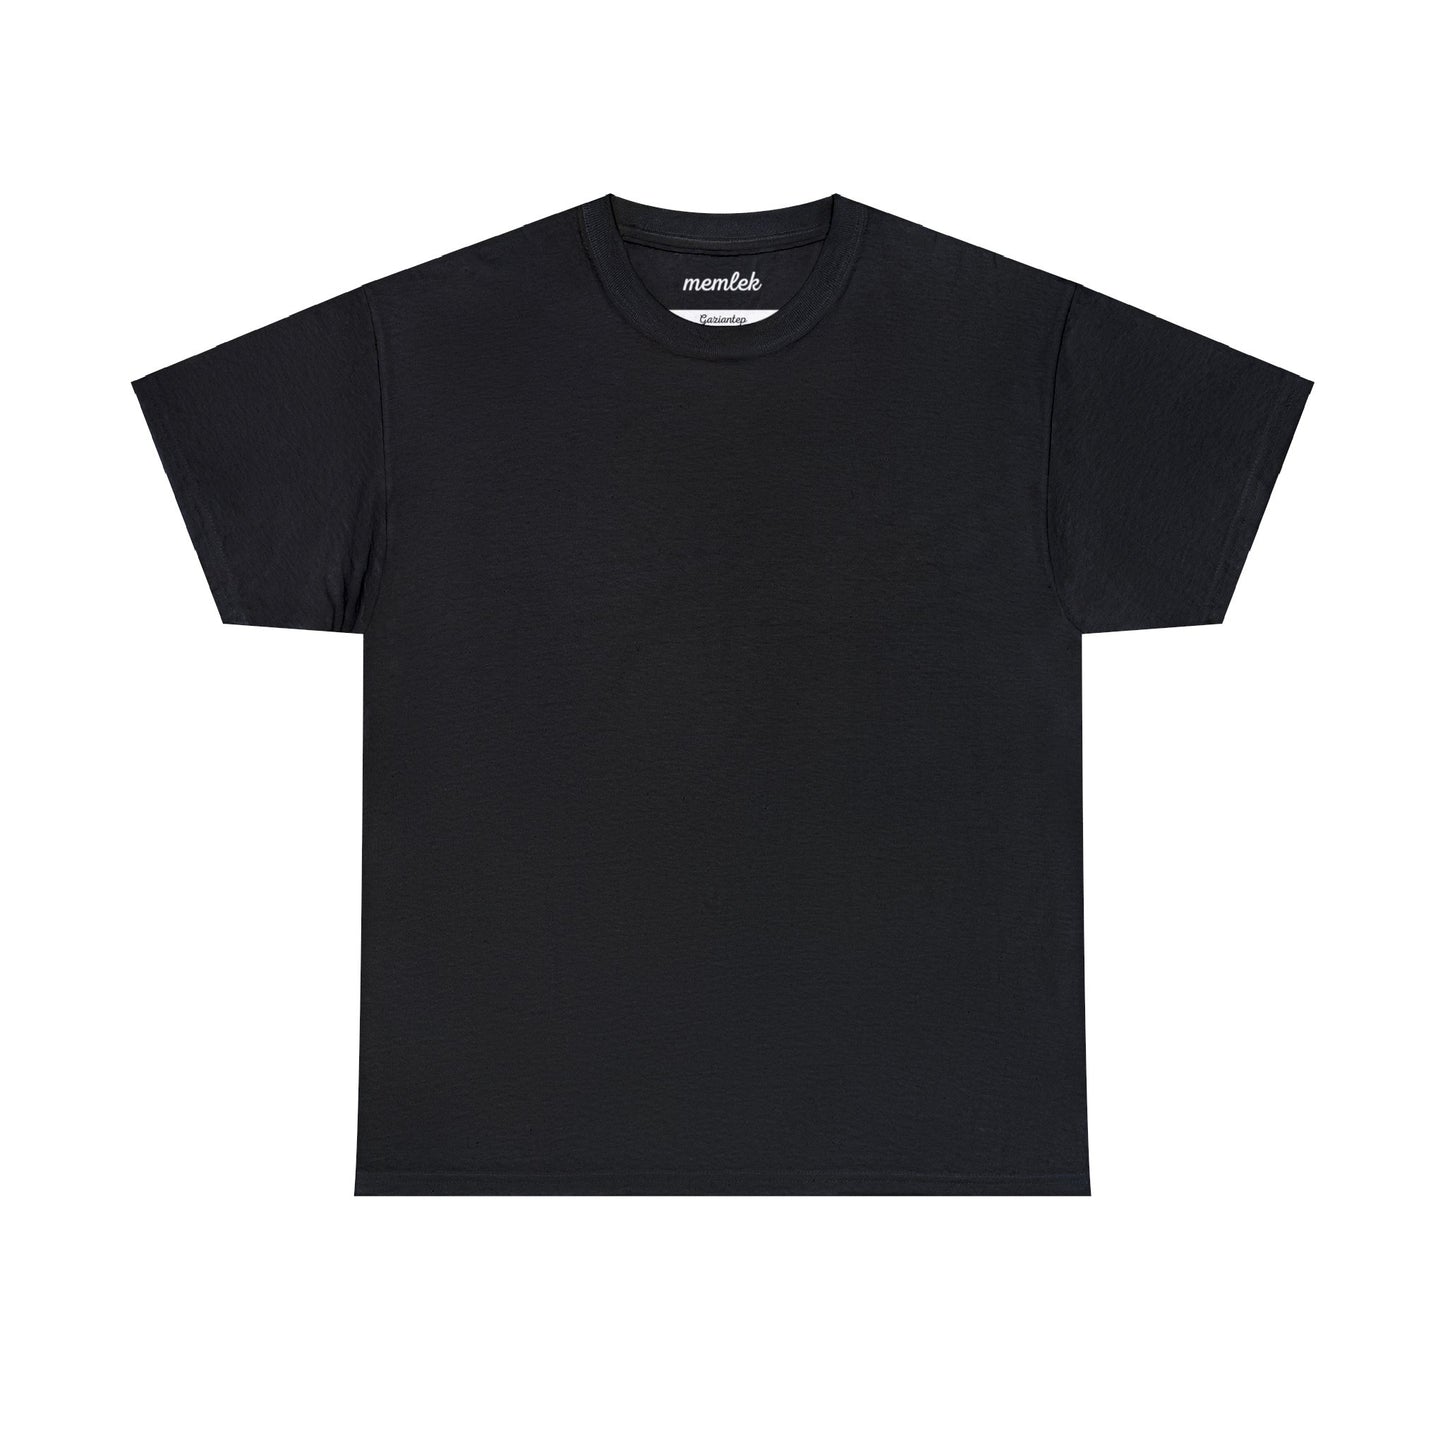 Kurt - 27 Gaziantep - T-Shirt - Back Print - Black/White